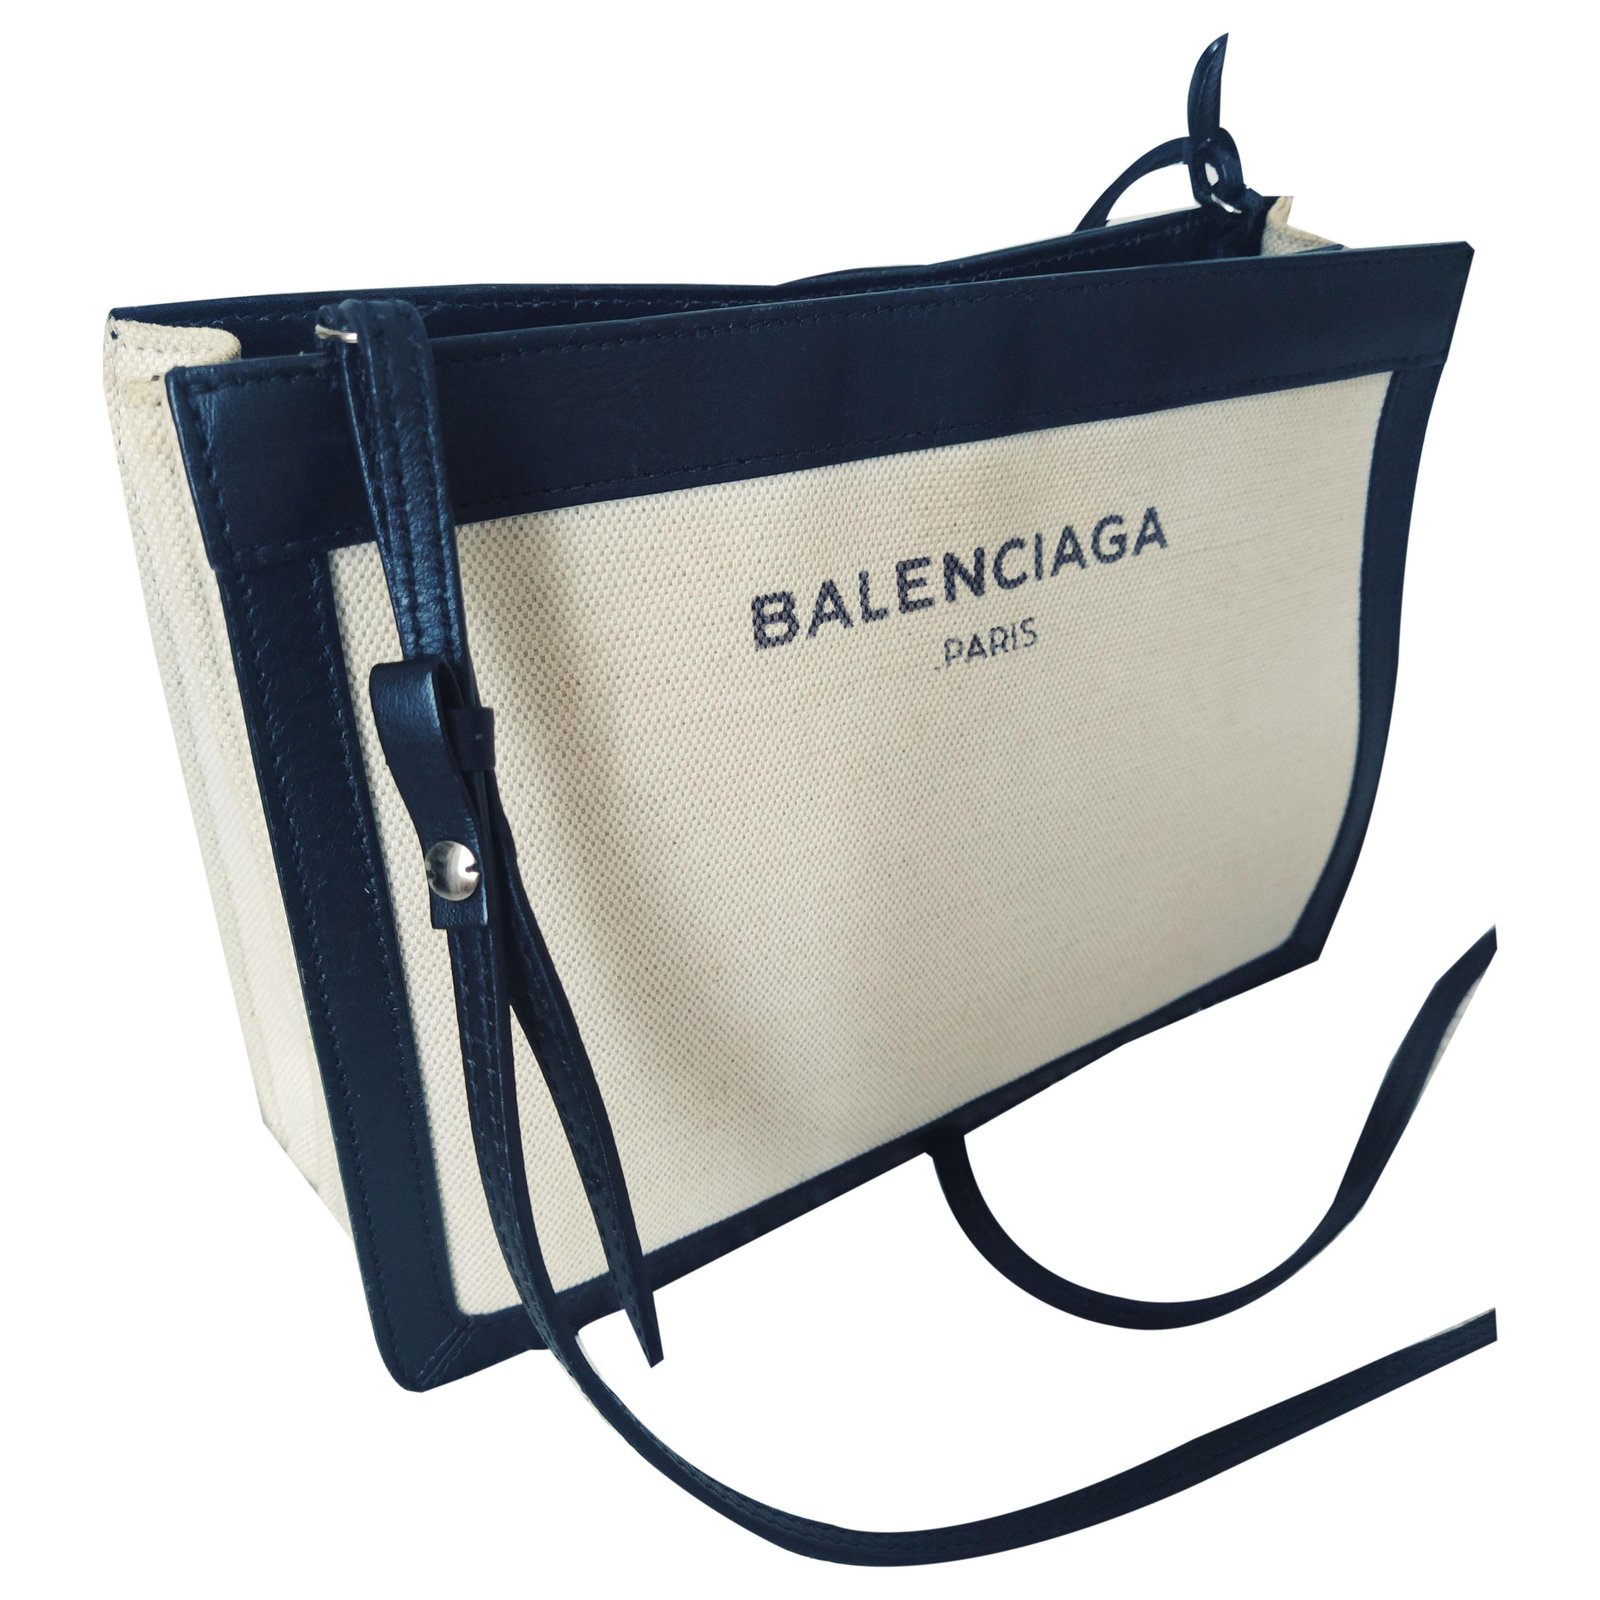 Balenciaga Crossbody Bags  Handbags for Women  Authenticity Guaranteed   eBay